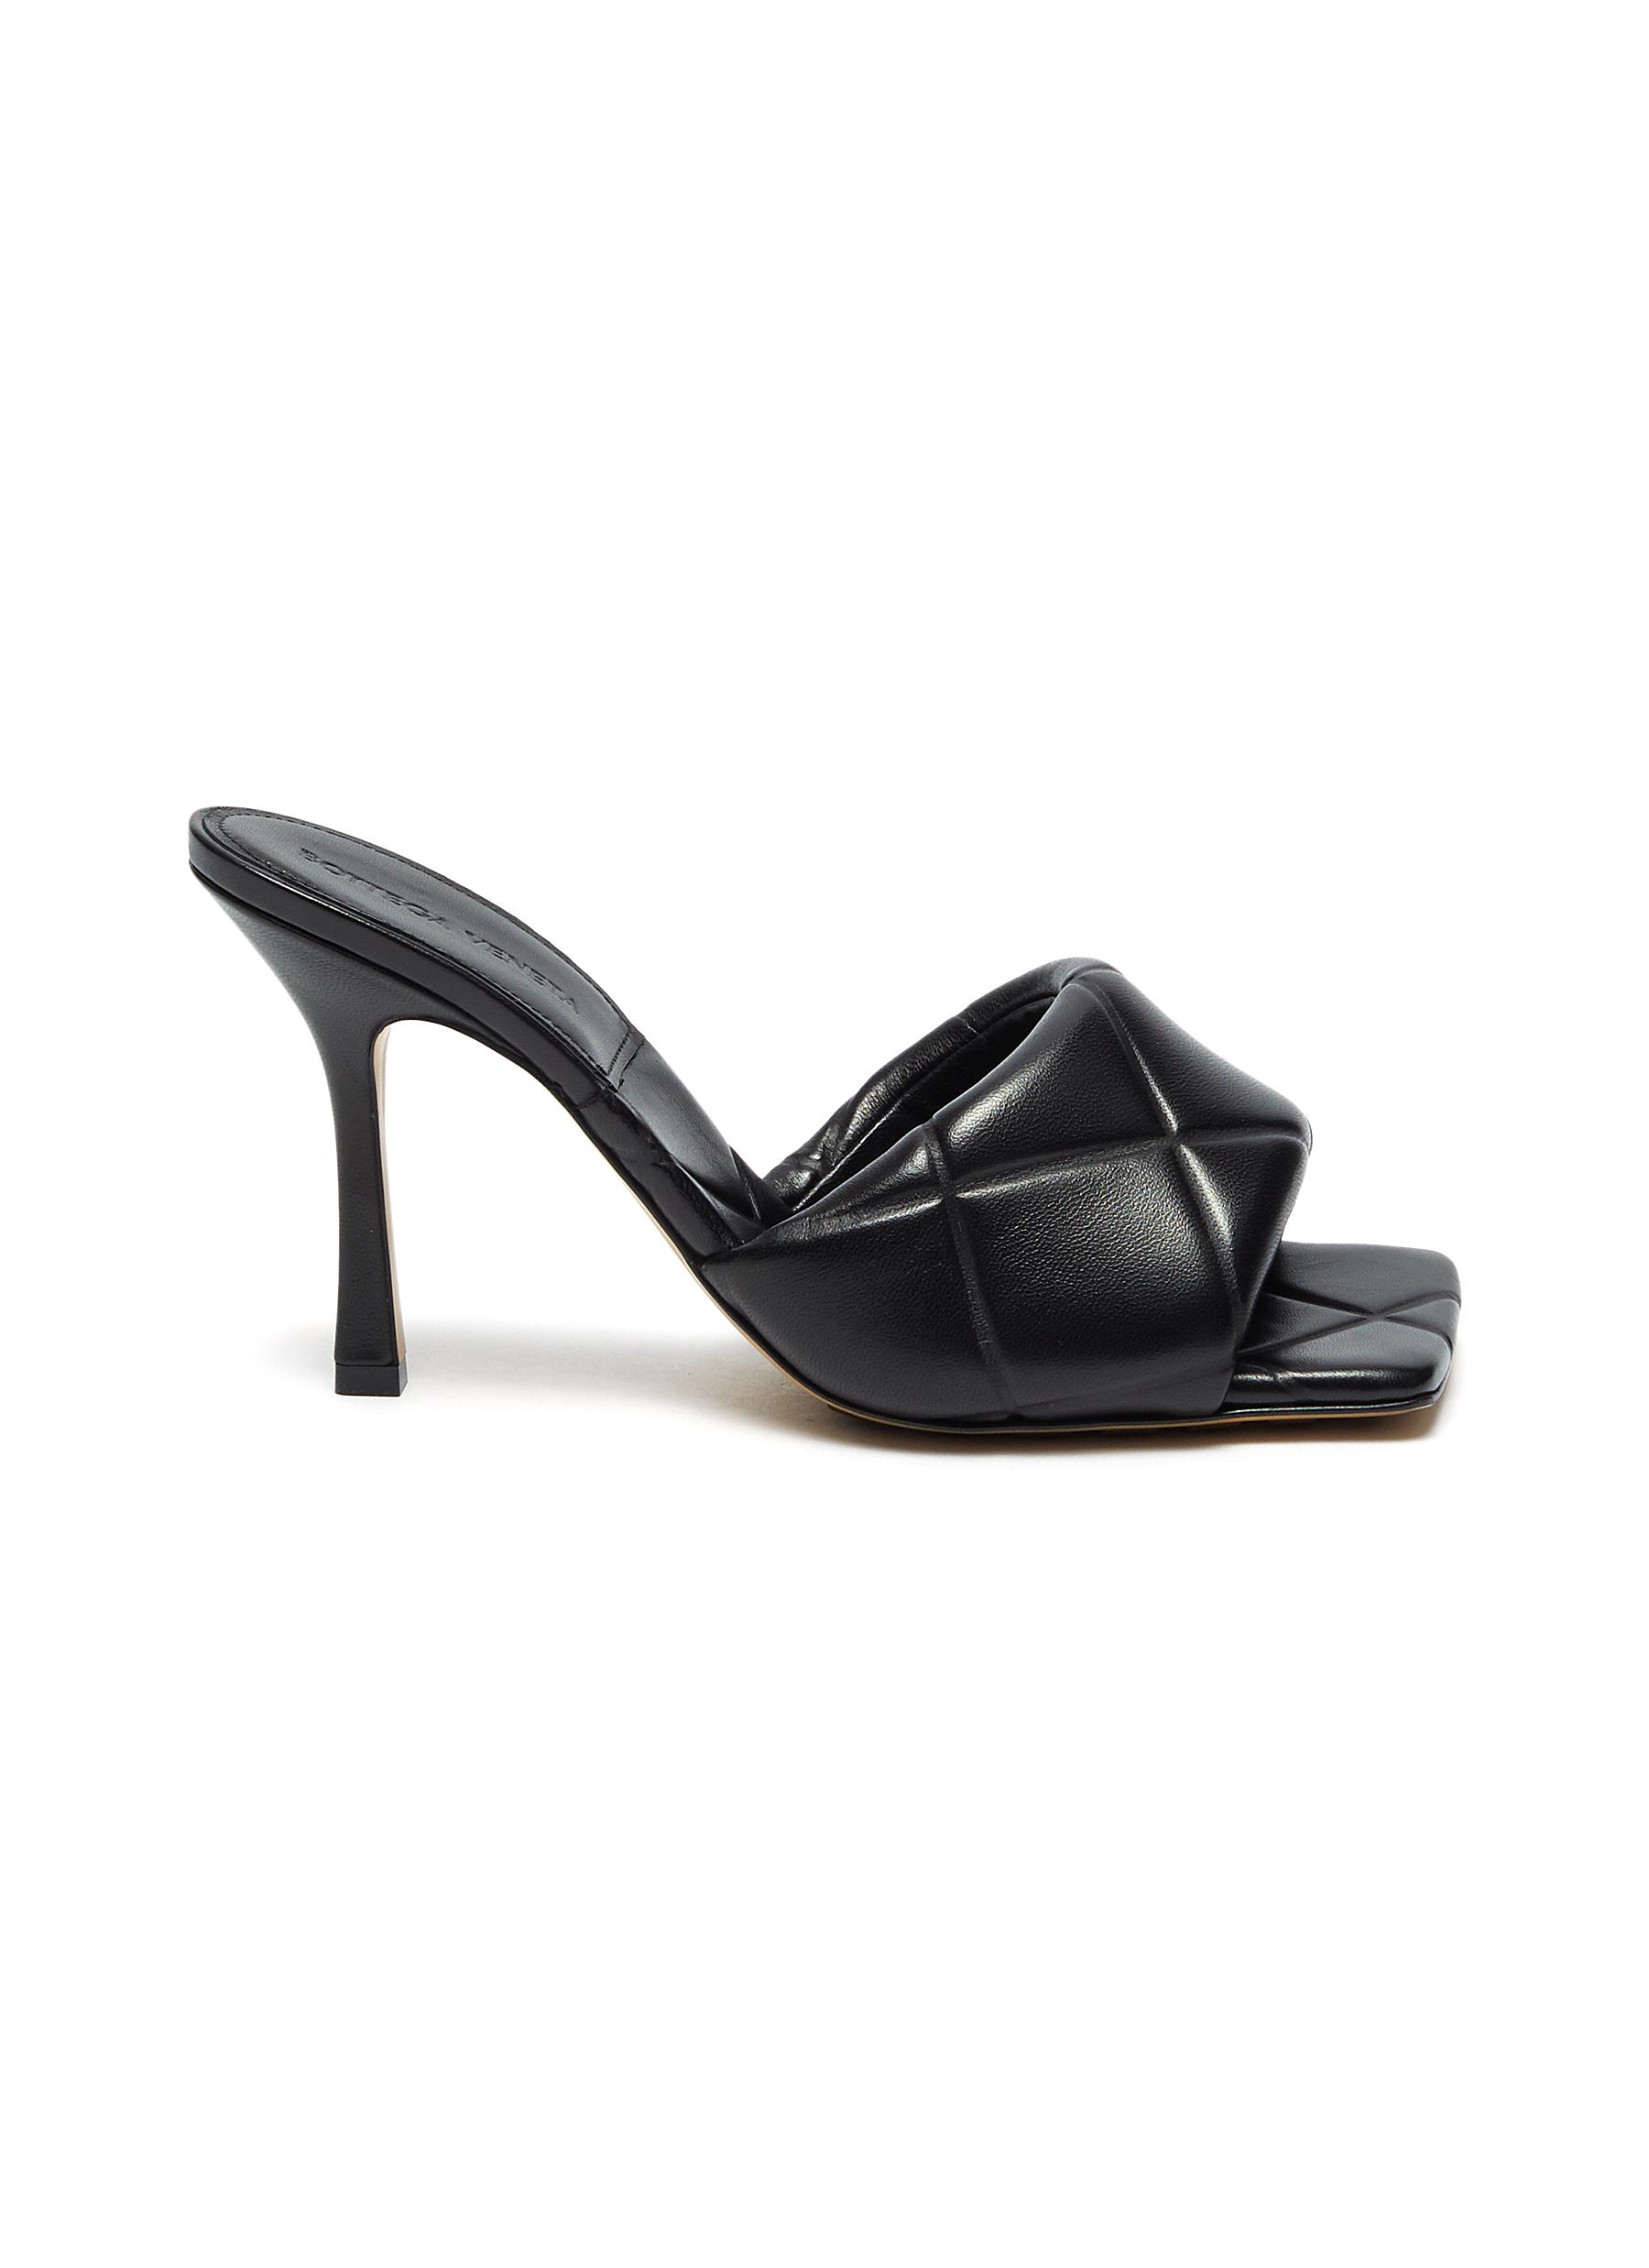 Intrecciato leather square toe heeled sandals